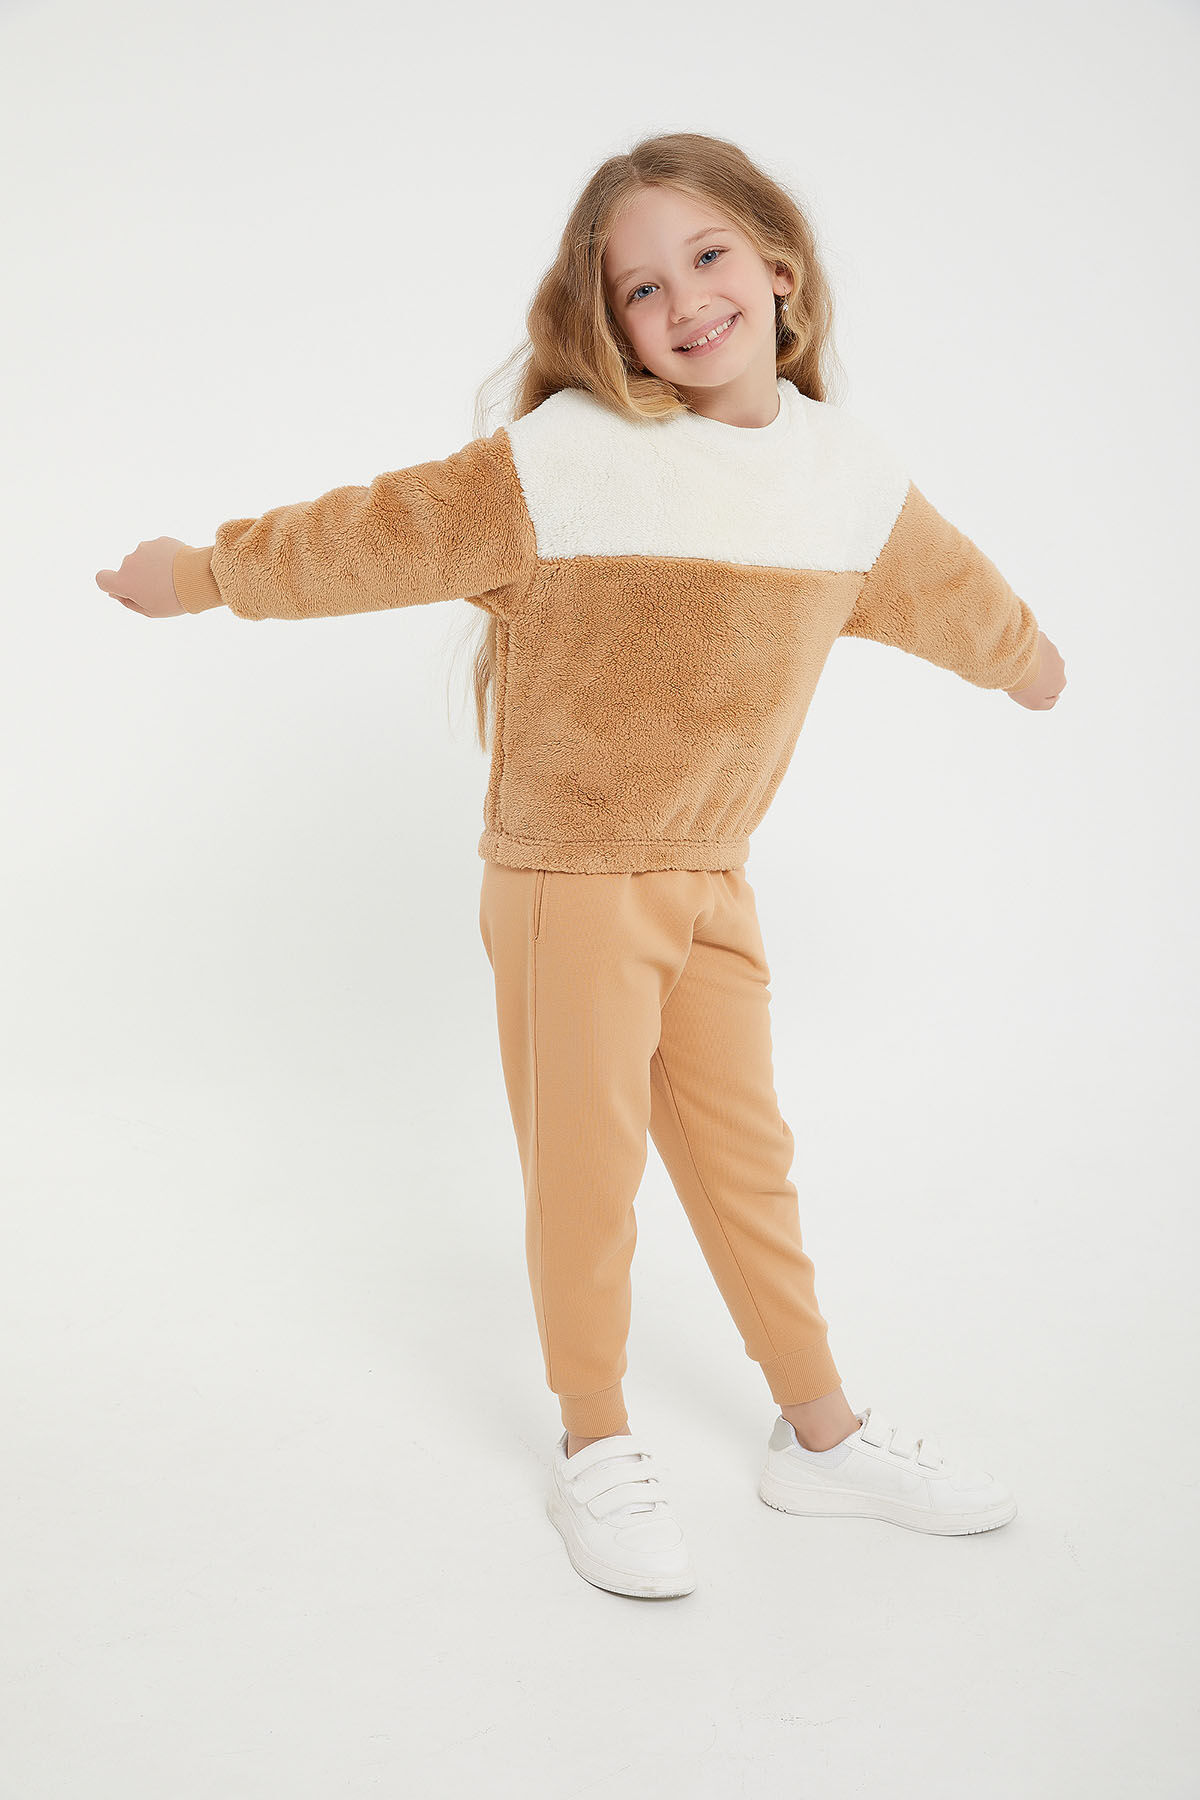 RolyPoly - RolyPoly Camel Kız Çocuk Polar Eşofman Takım